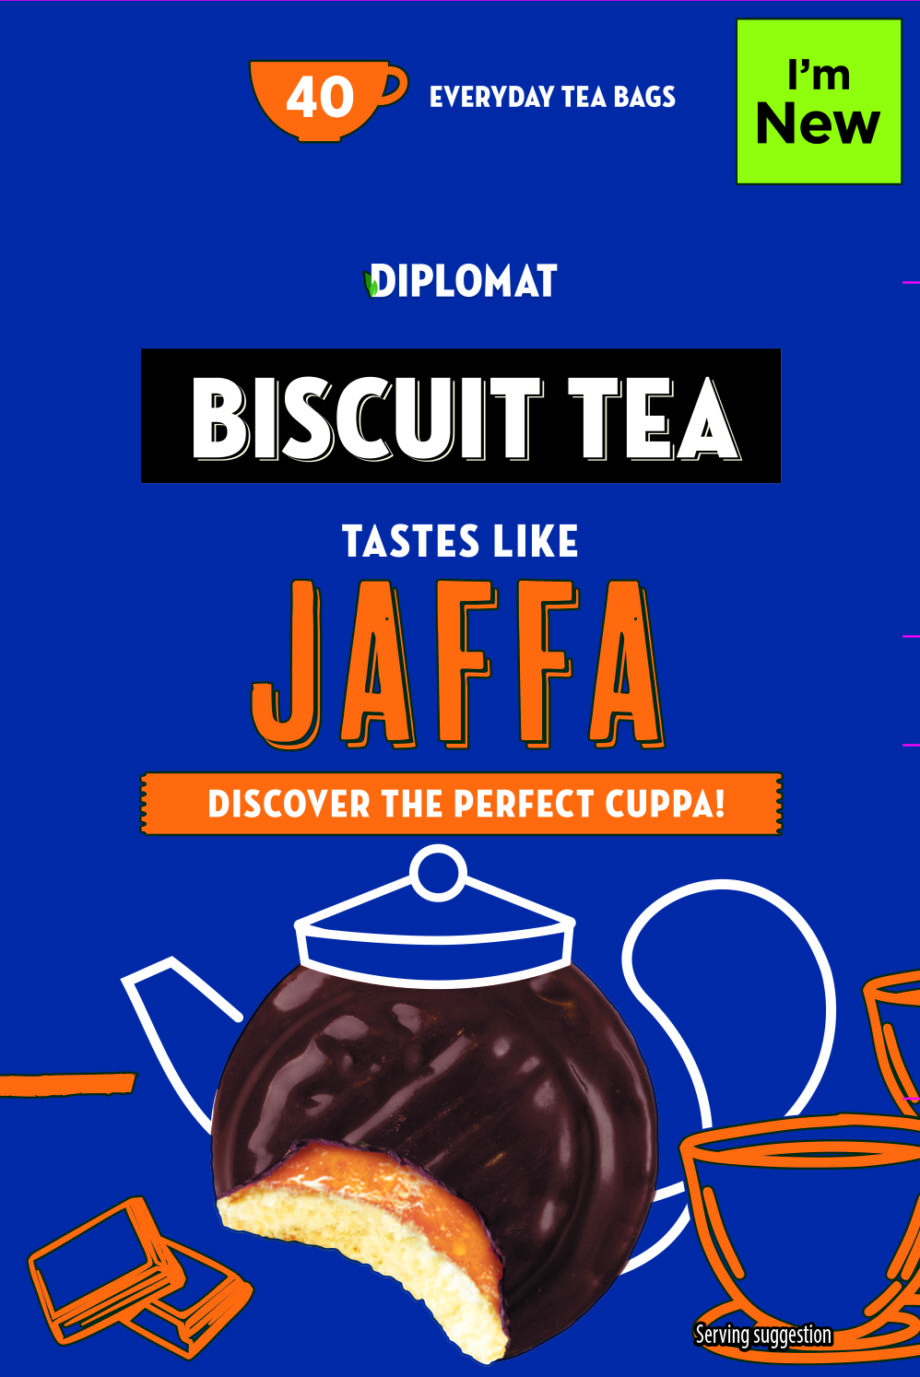 Aldi's Jaffa flavoured biscuit tea